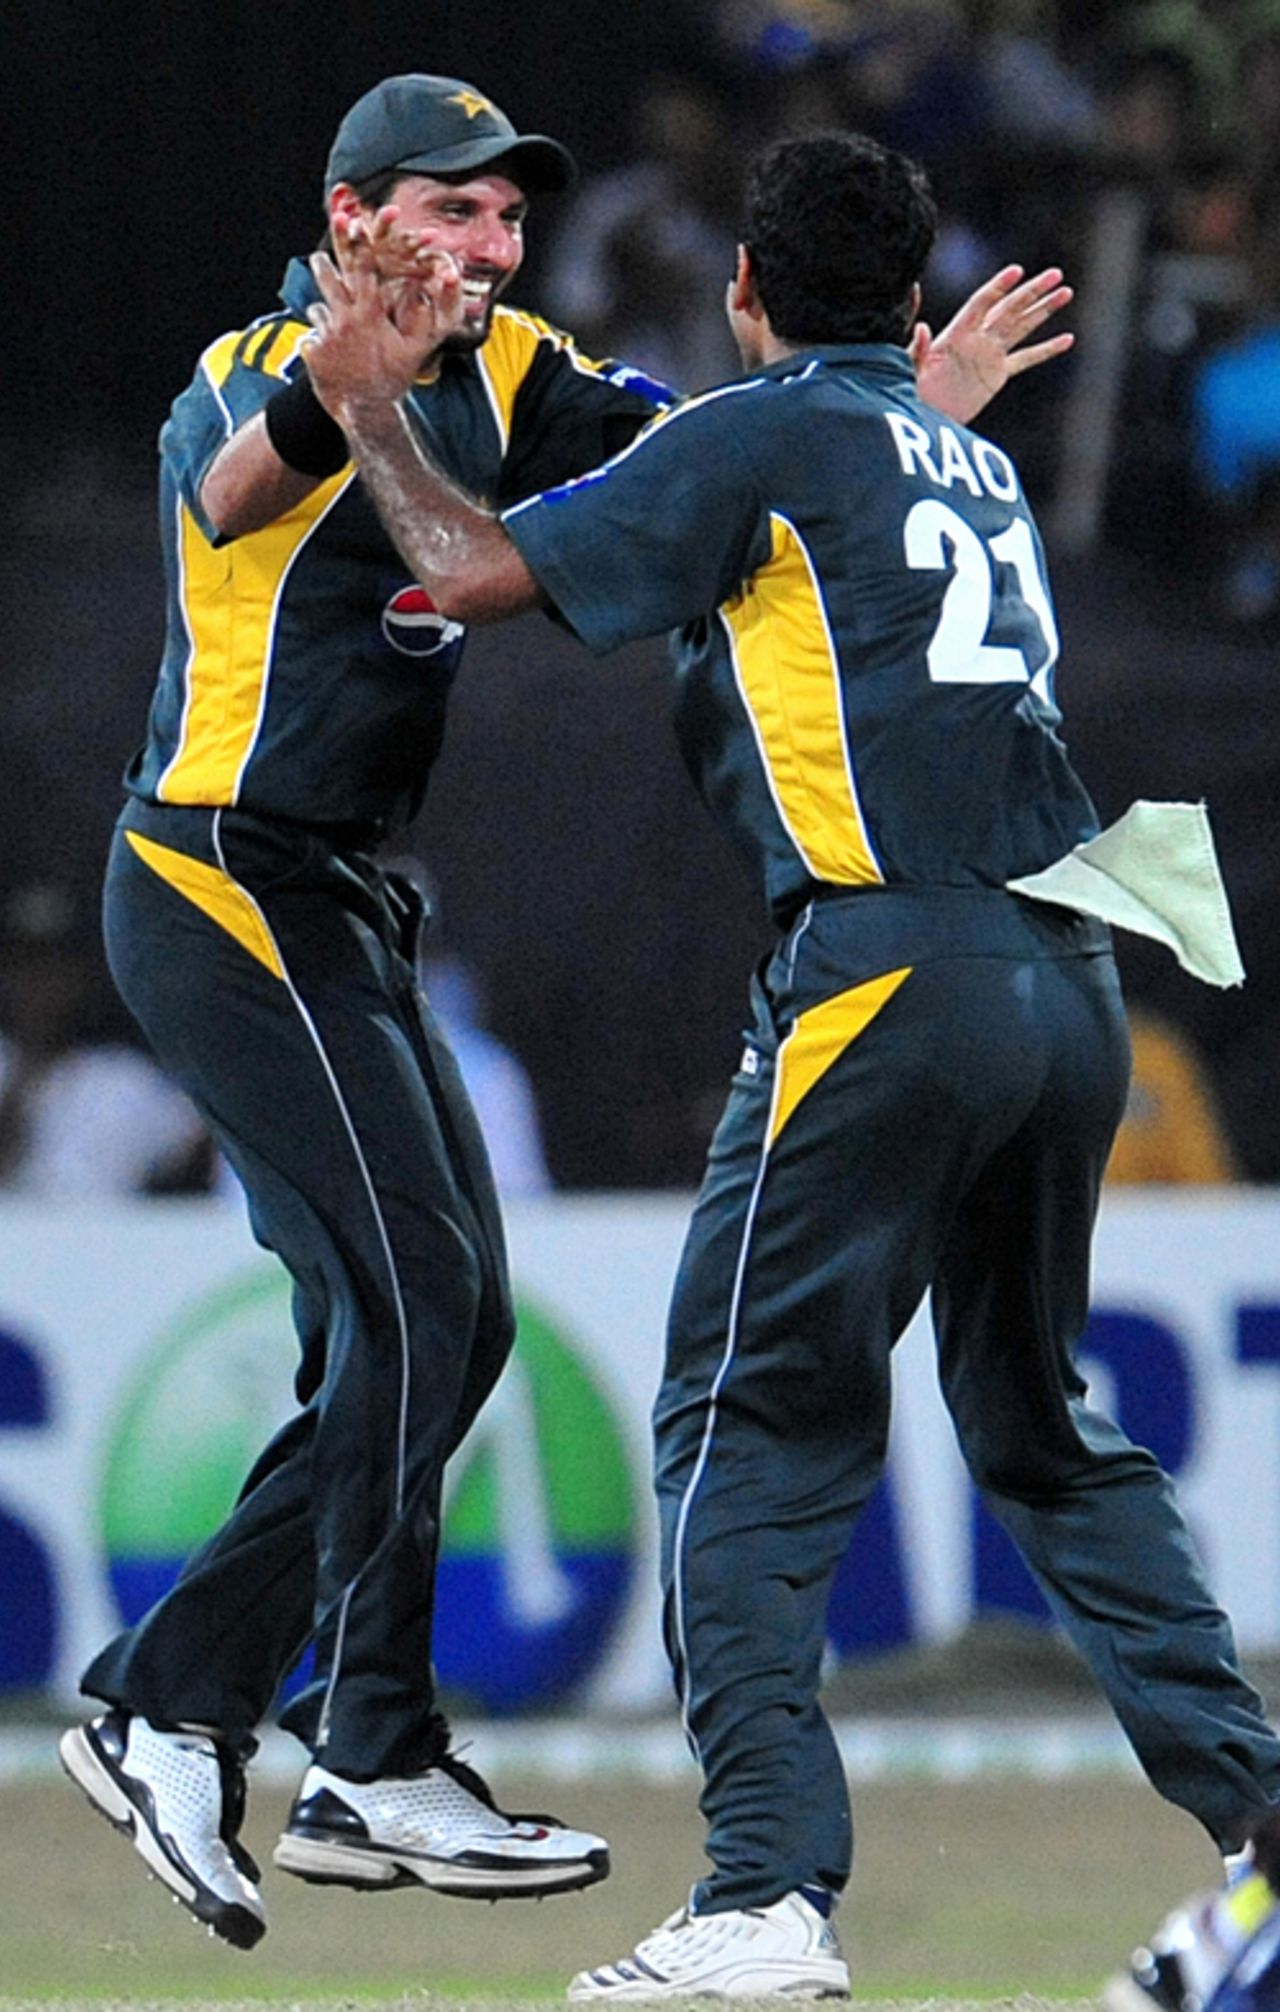 Shahid Afridi and Iftikhar Anjum in high spirits after the fall of Mahela Jayawardene's wicket, Sri Lanka v Pakistan, only Twenty20 international, Colombo, August 12, 2009